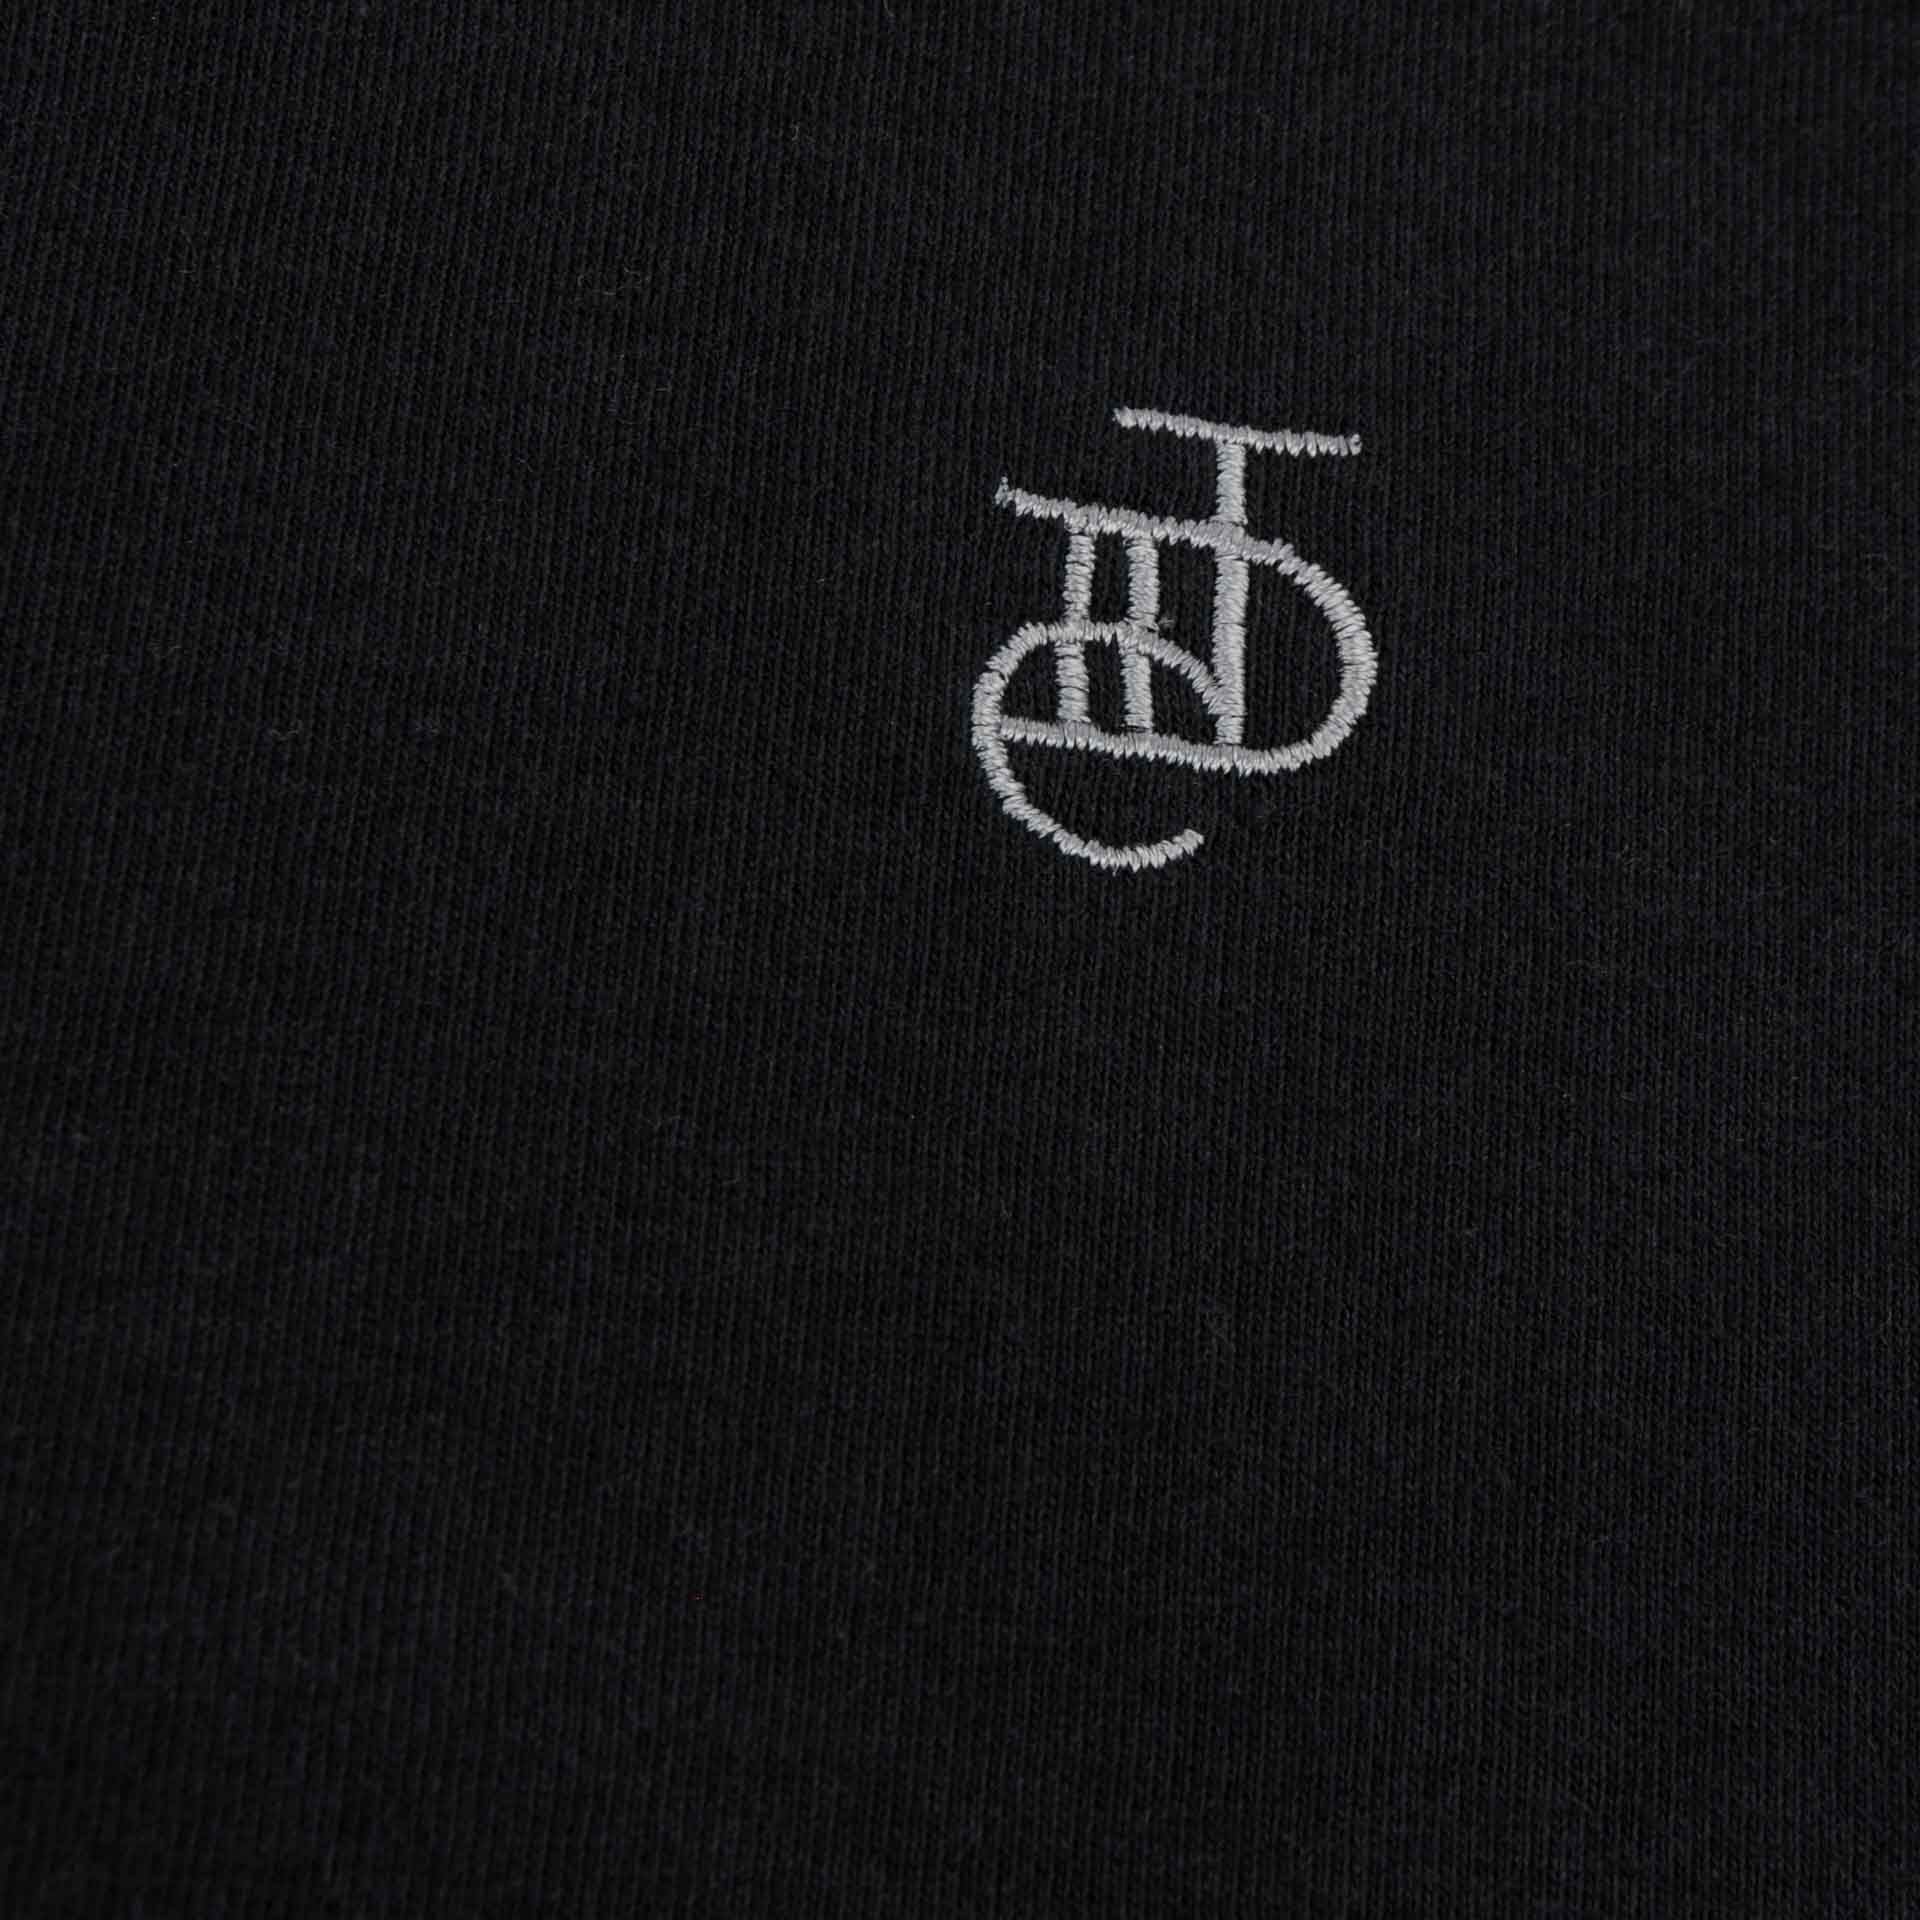 Tiide Classic Logo T-Shirt in Black